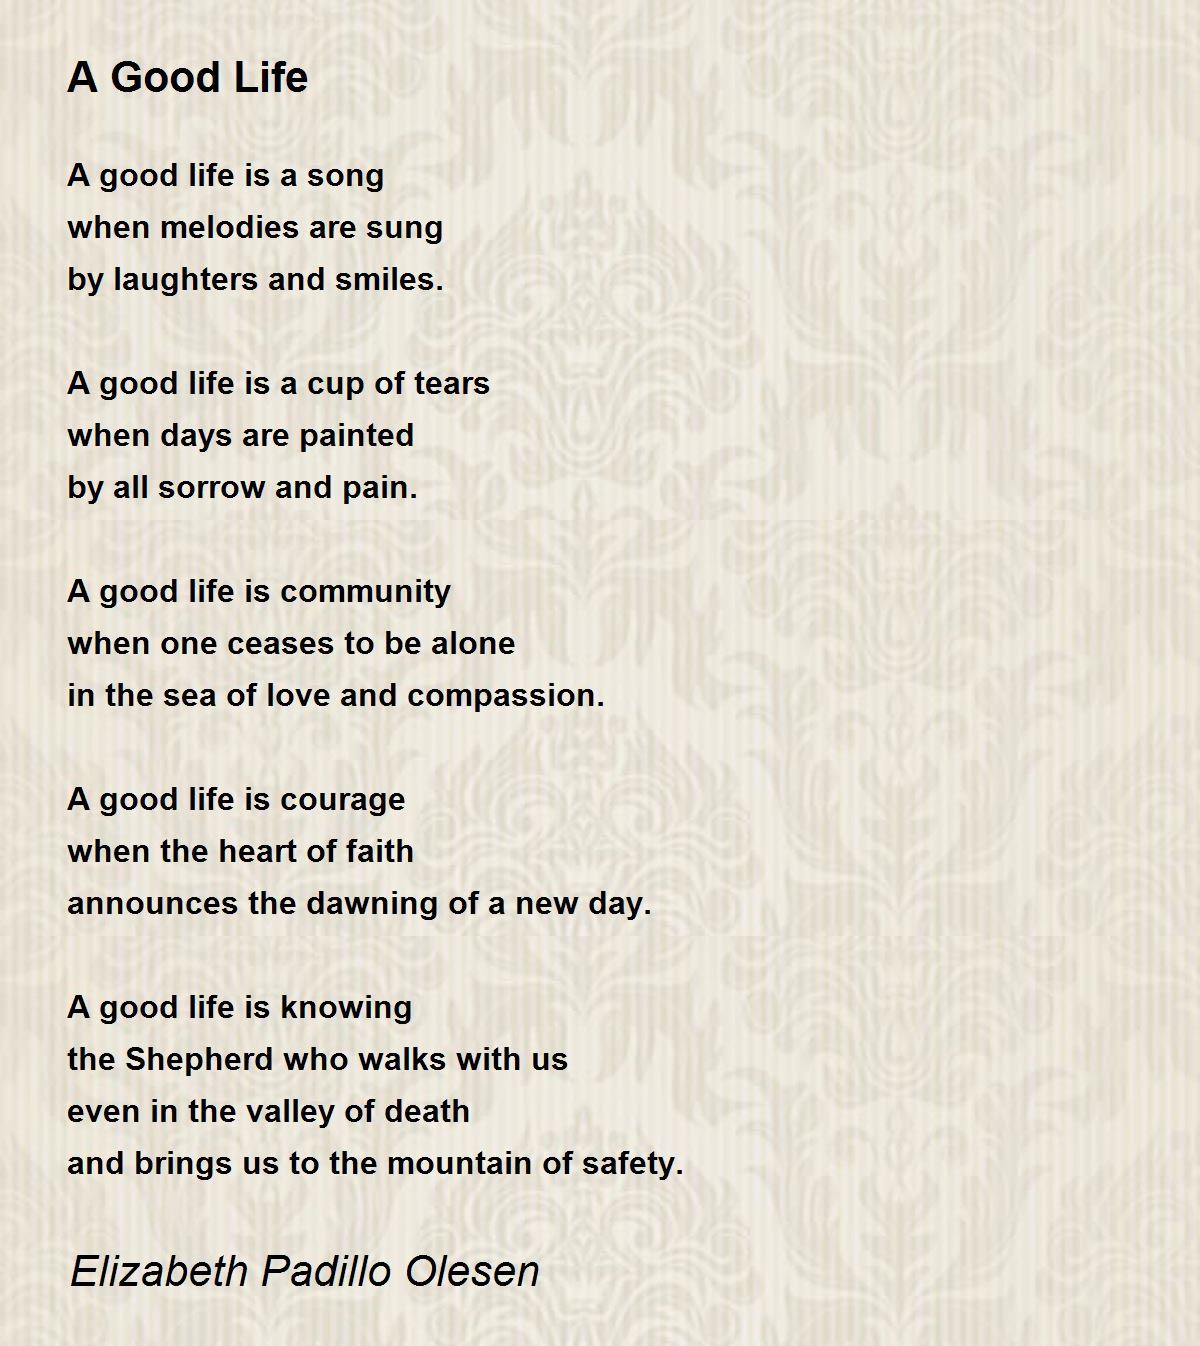 A Good Life - A Good Life Poem by Elizabeth Padillo Olesen